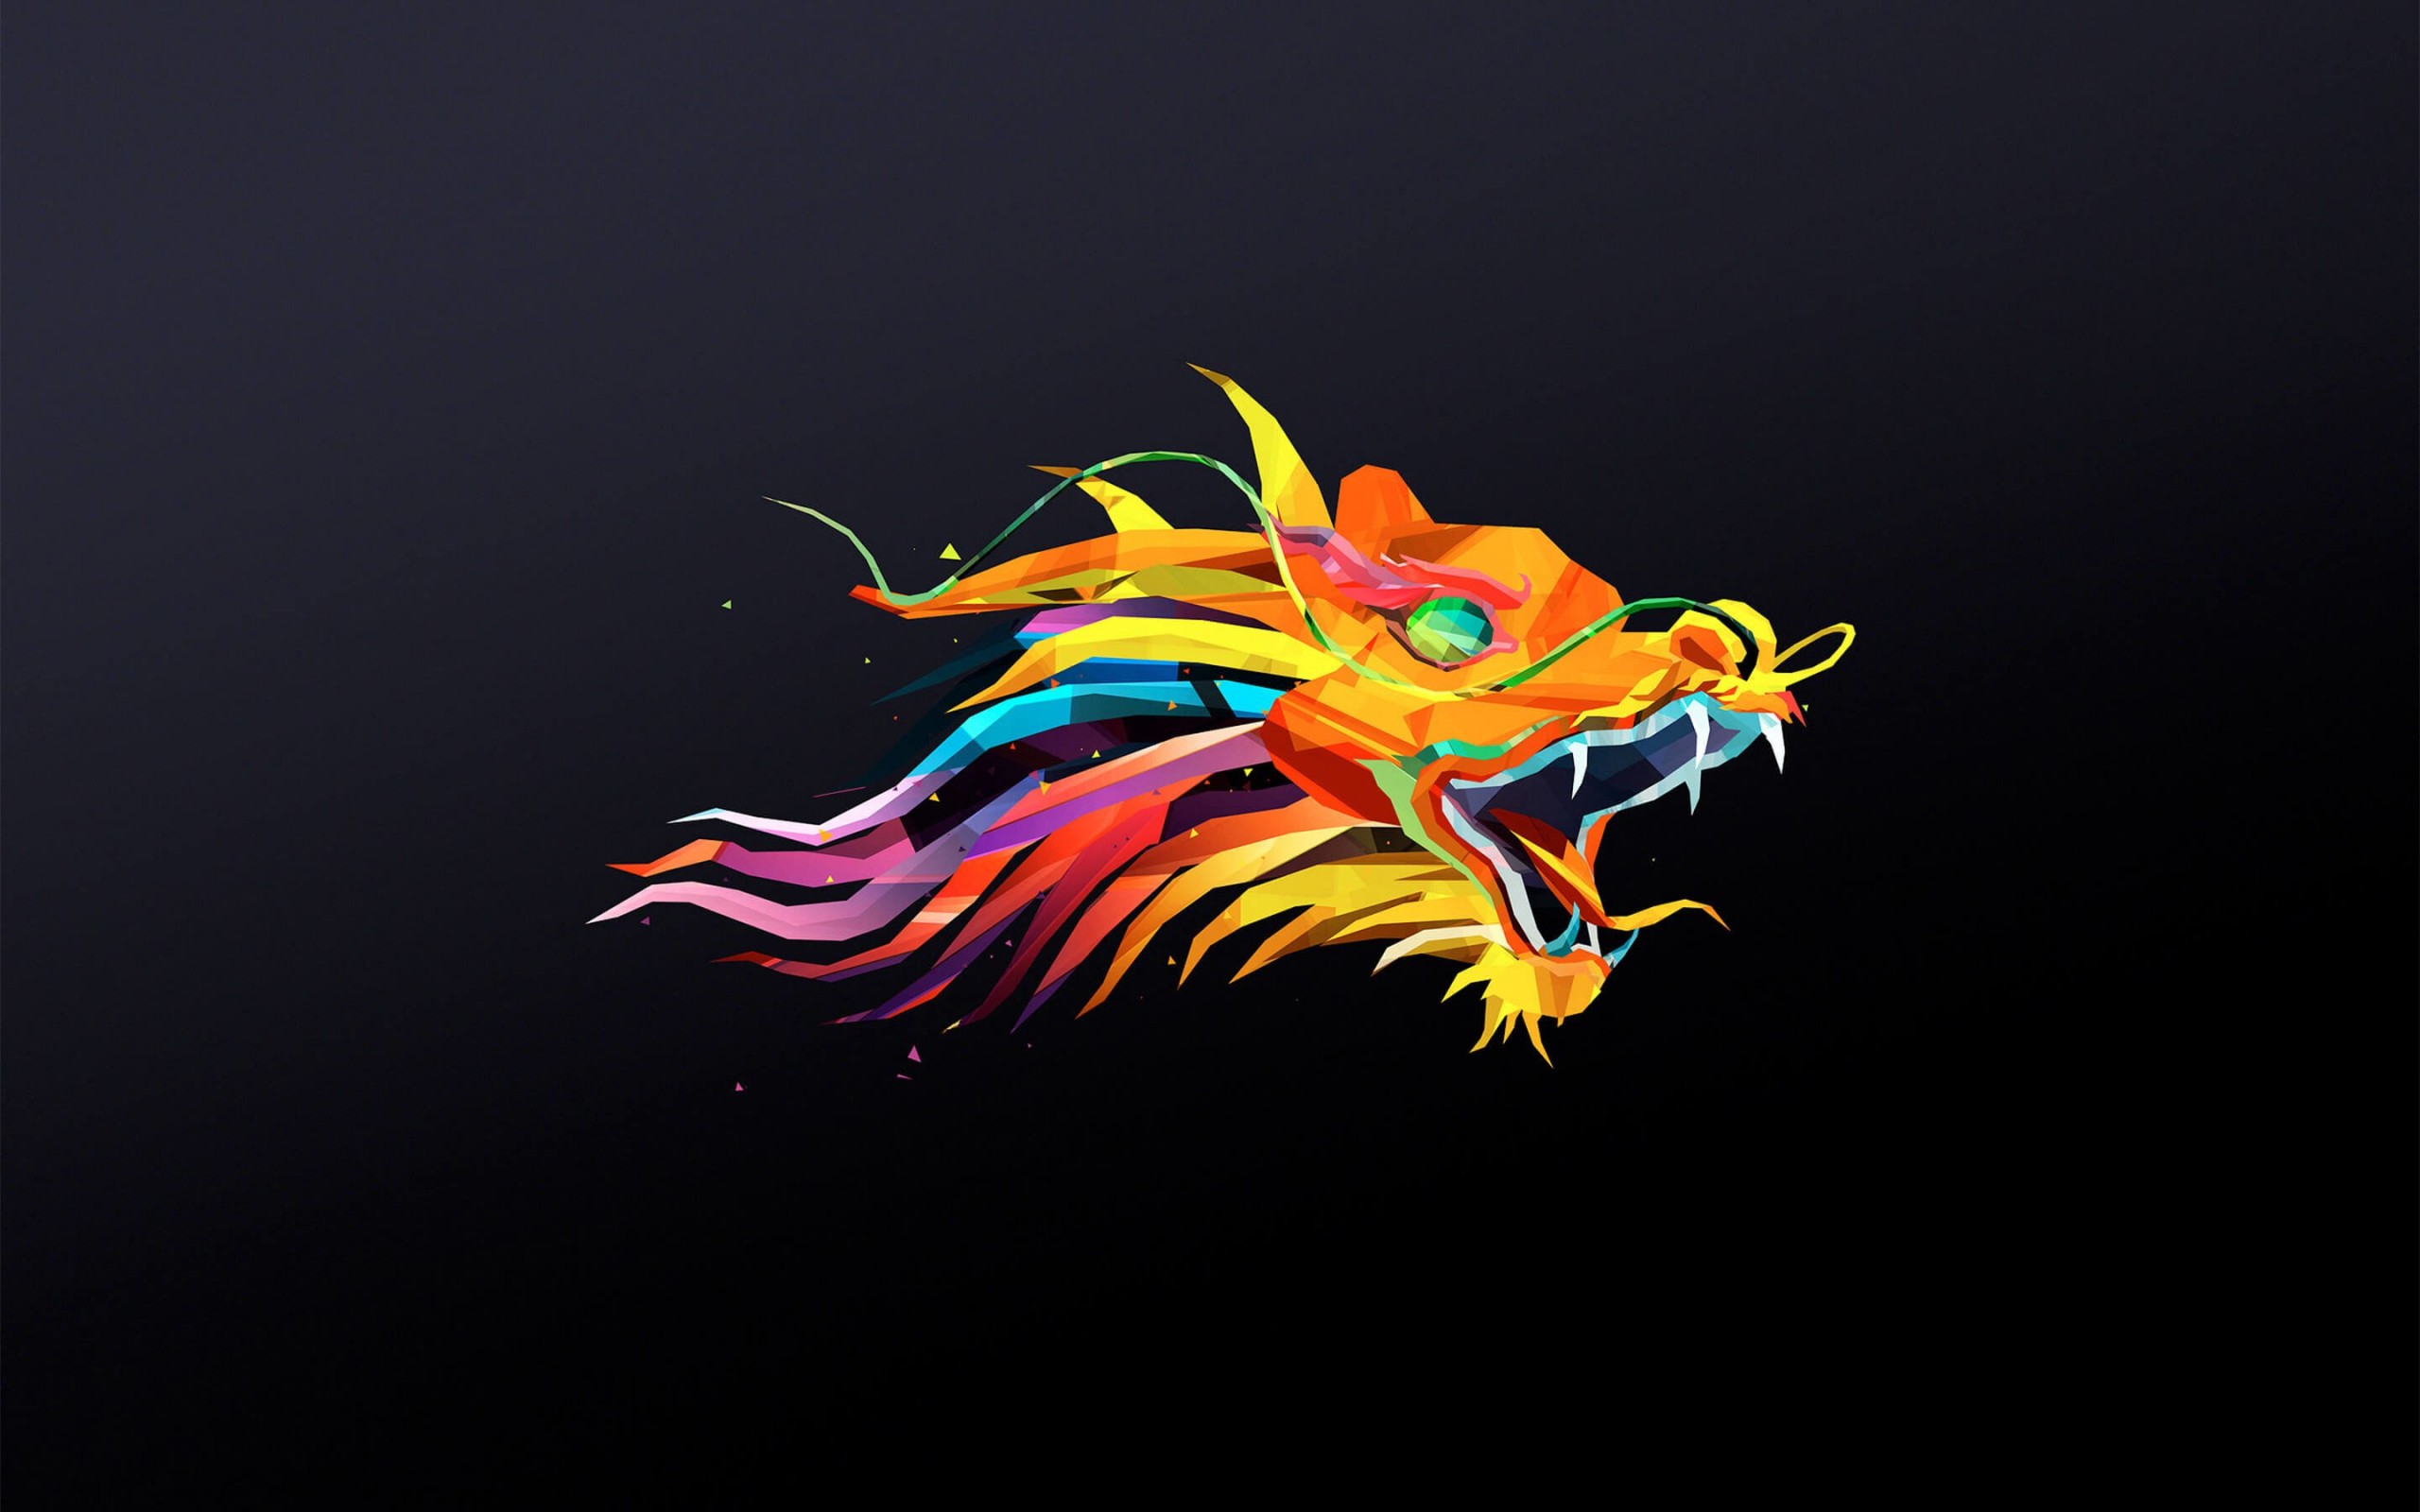 The Dragon Wallpaper for Desktop 2560x1600